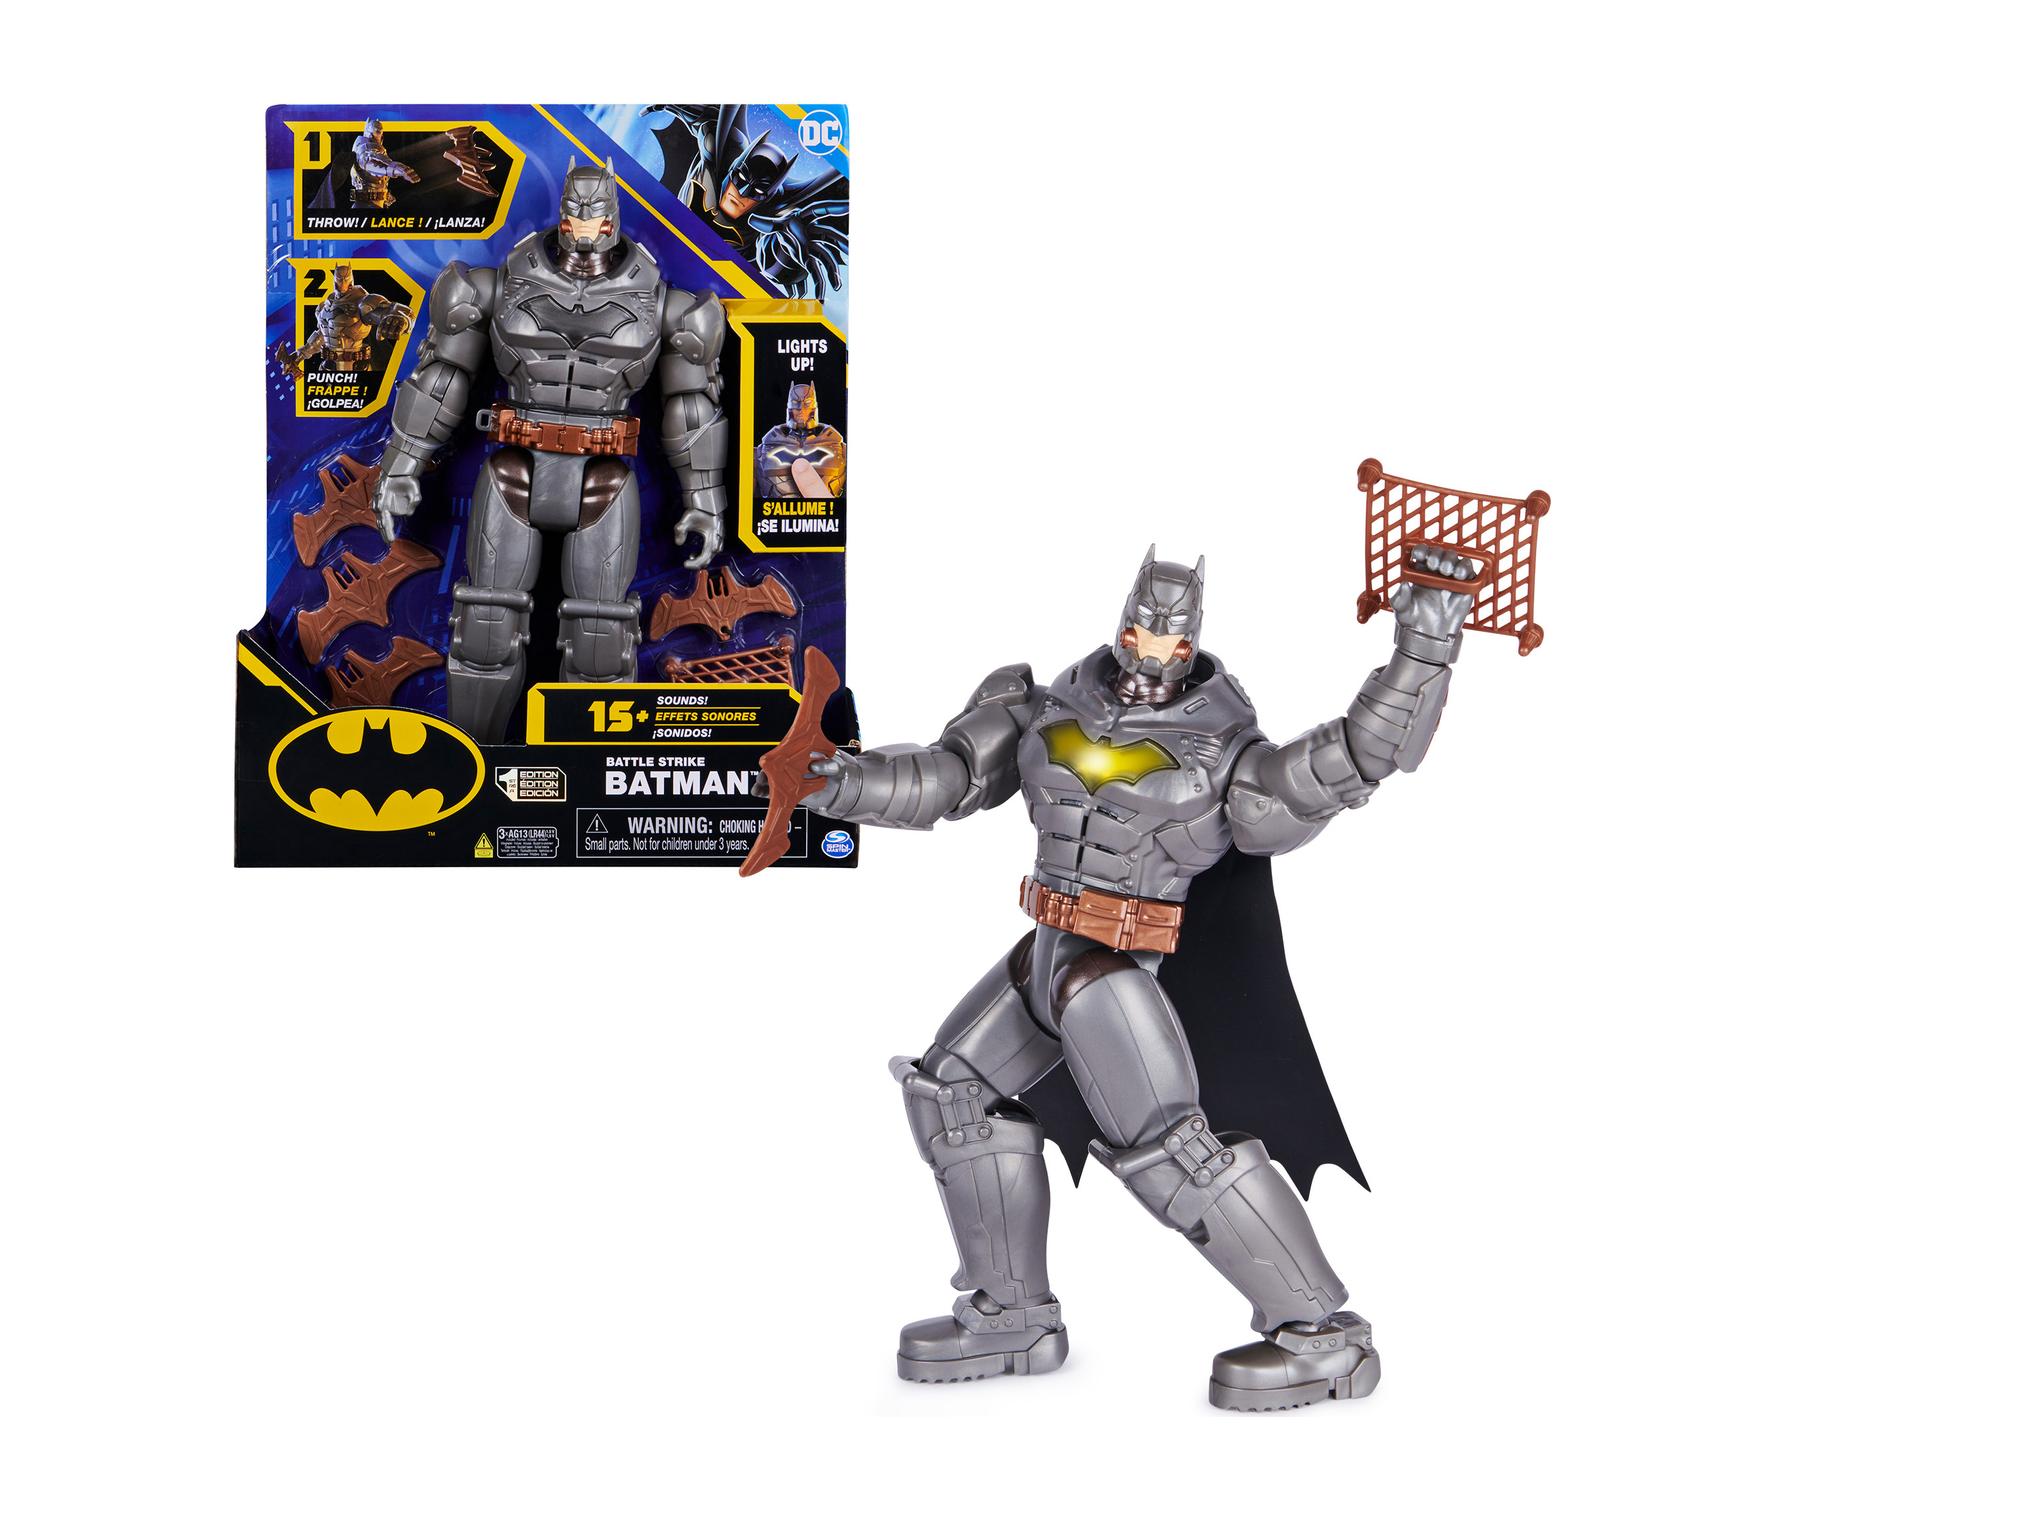 Oferta de Batman figura... por 31,95€ en Jugueterías Nikki